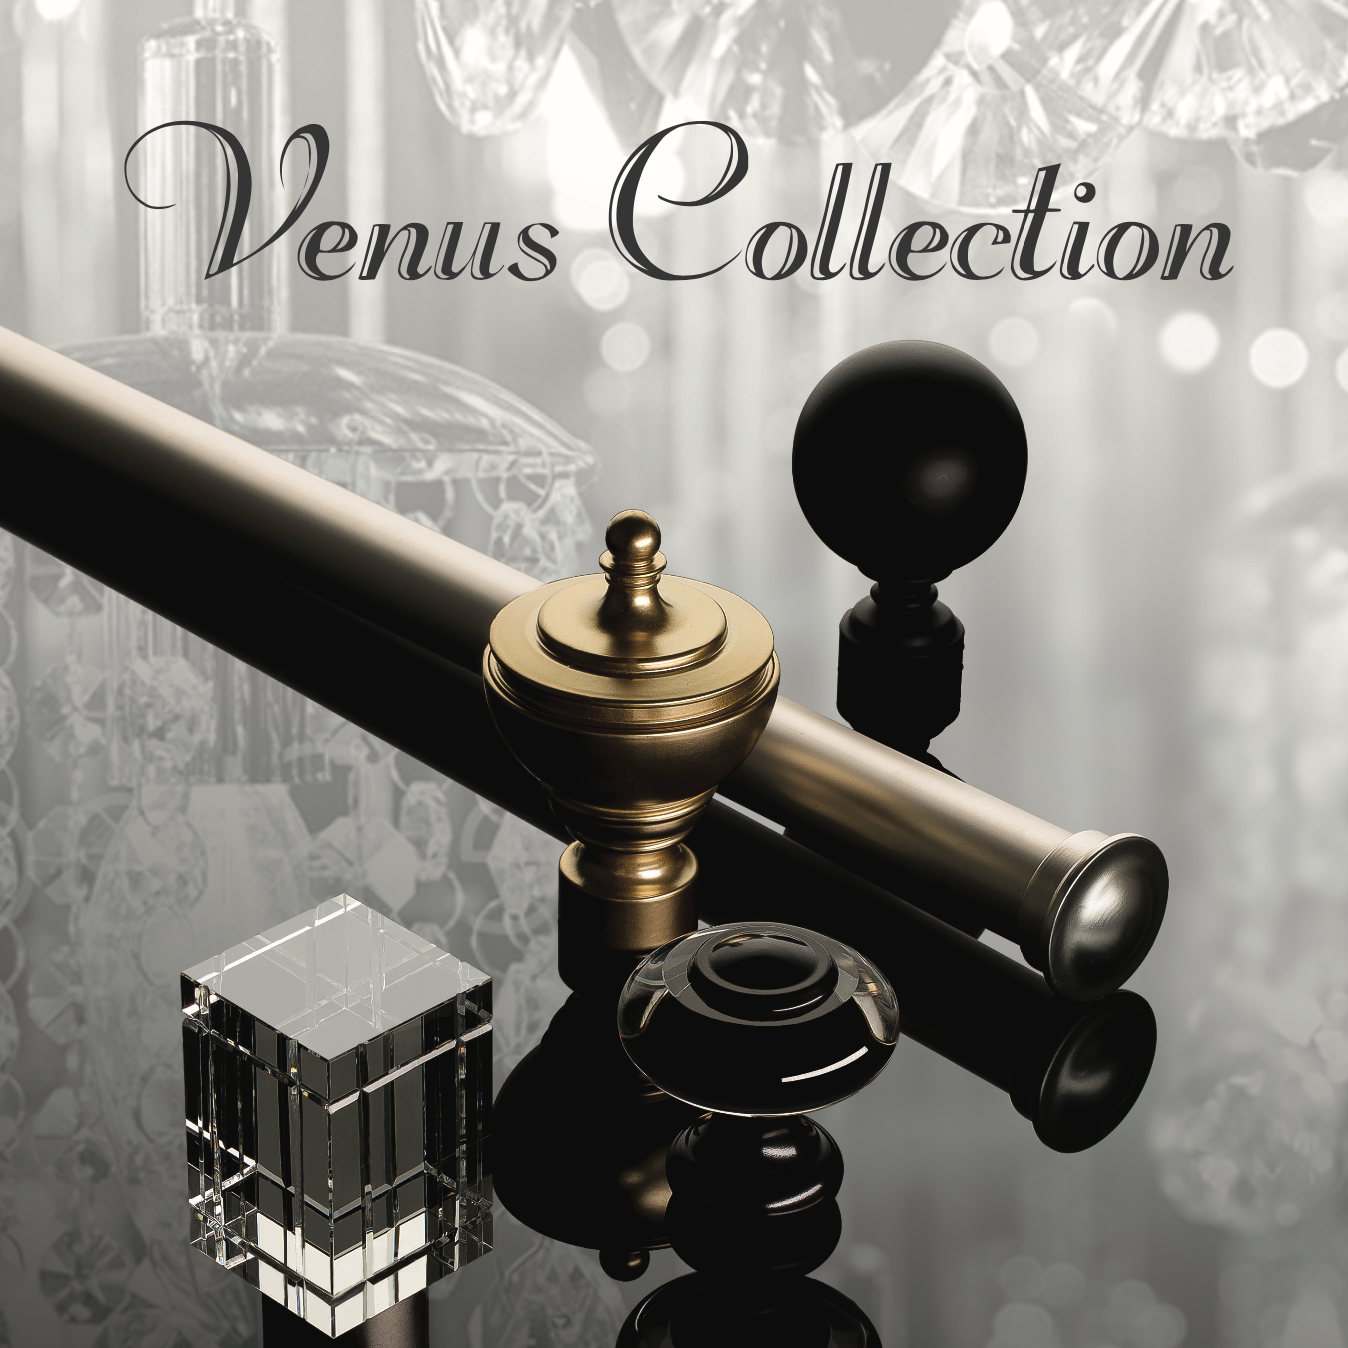 Venus Collection